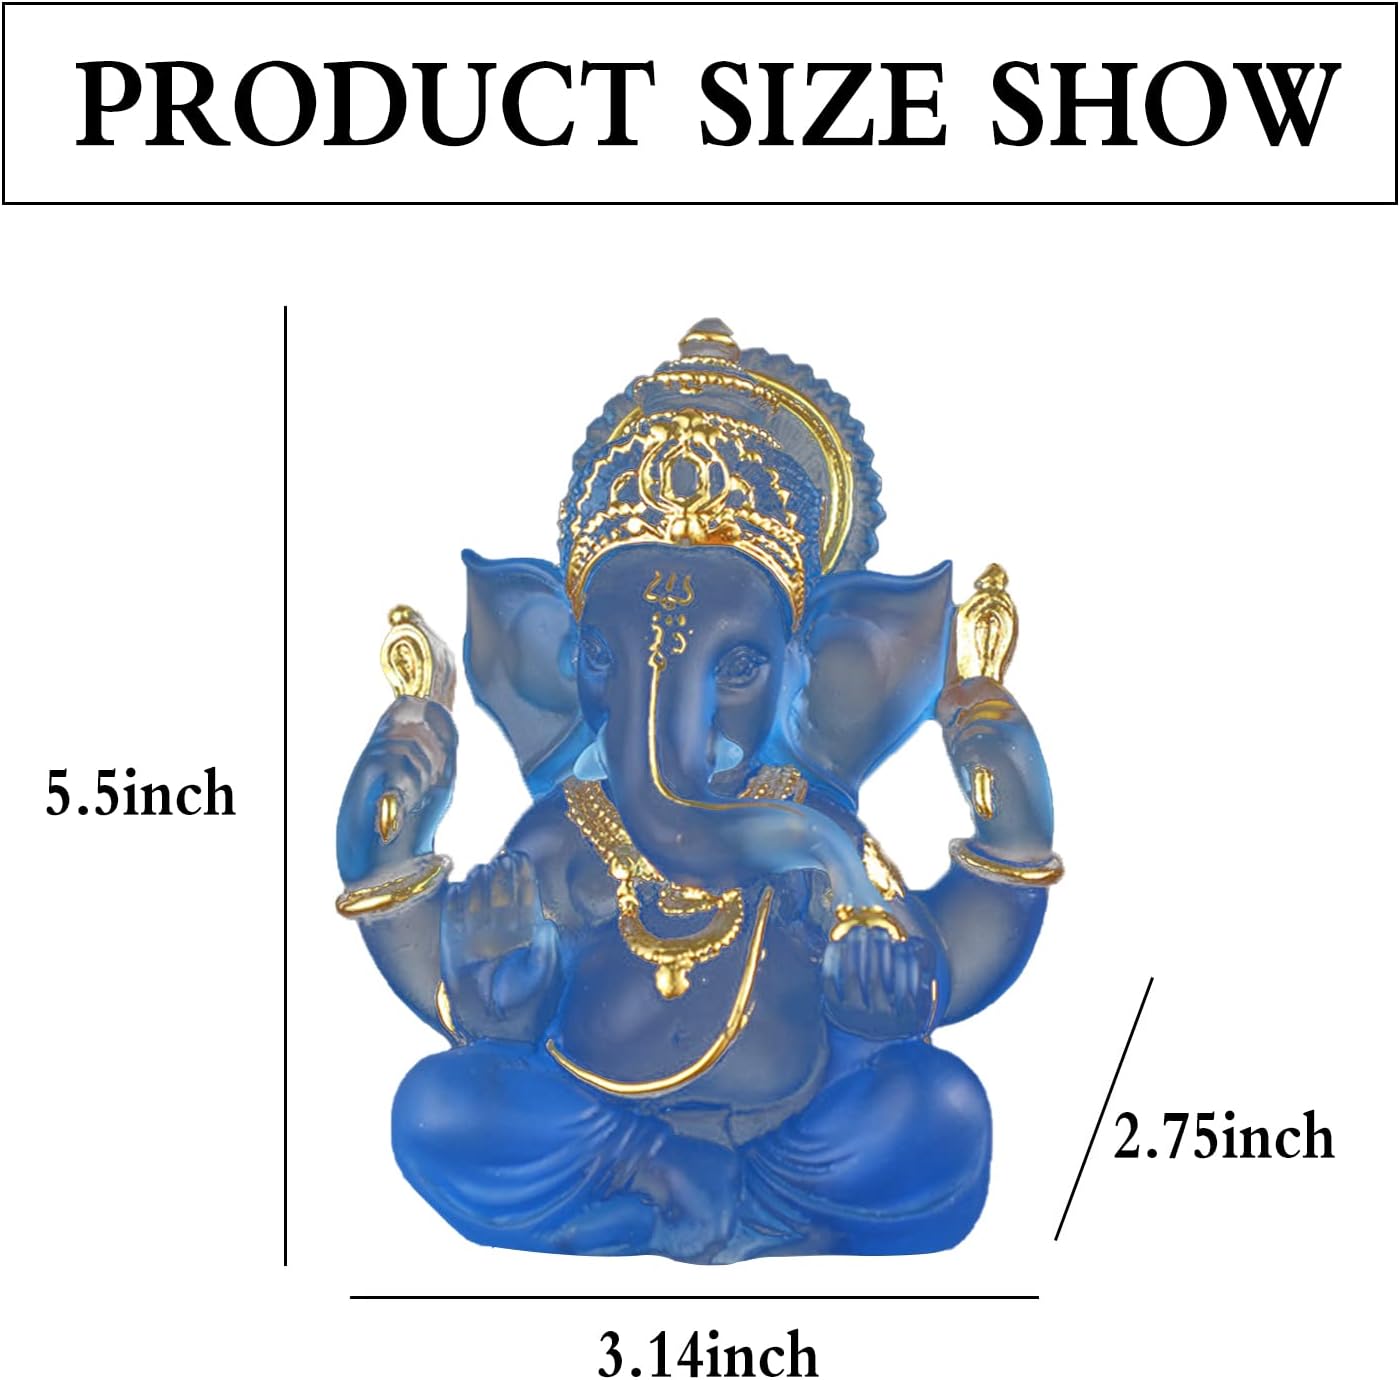 Lord Ganesha Statue Ganpati Elephant Hindu God Sculpture, Elephant God Statue, Blue Indian Ganesha Idol Figurine for Car Dashboard Home Decoration